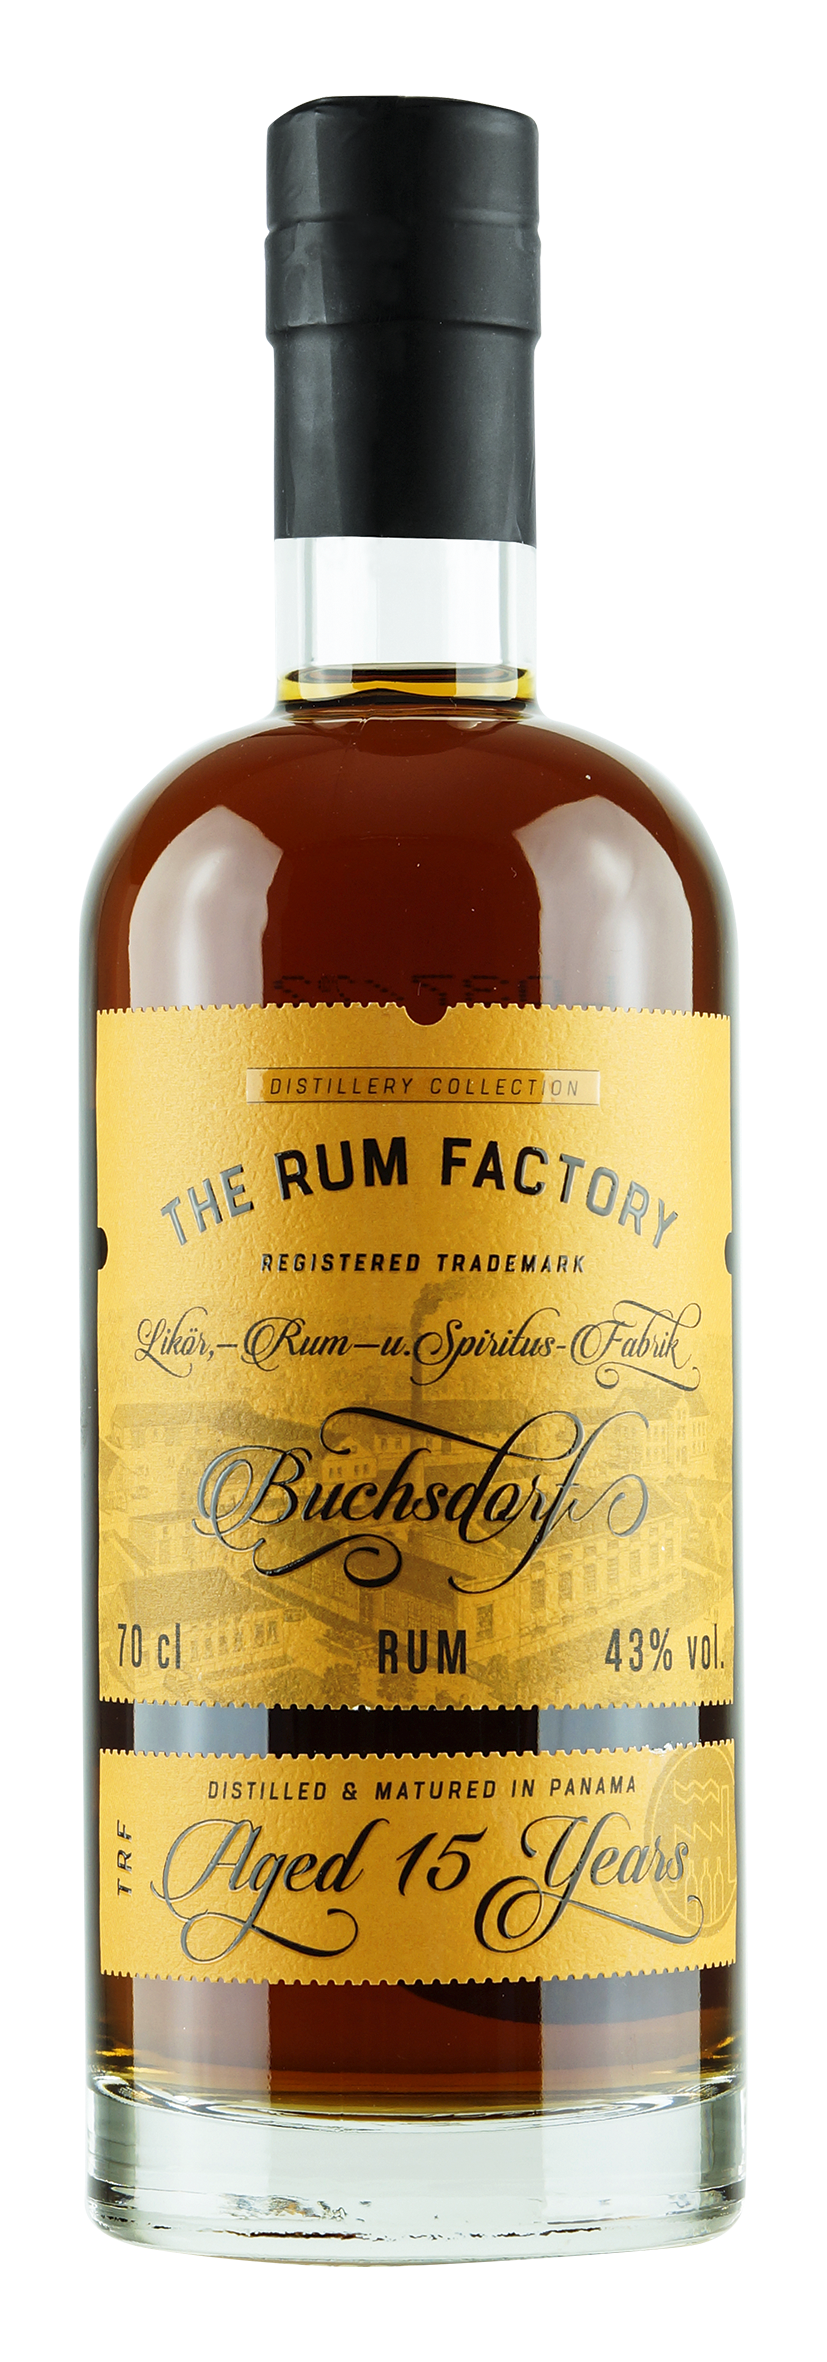 The Rum Factory Buchsdorf Aged 15 Years 0